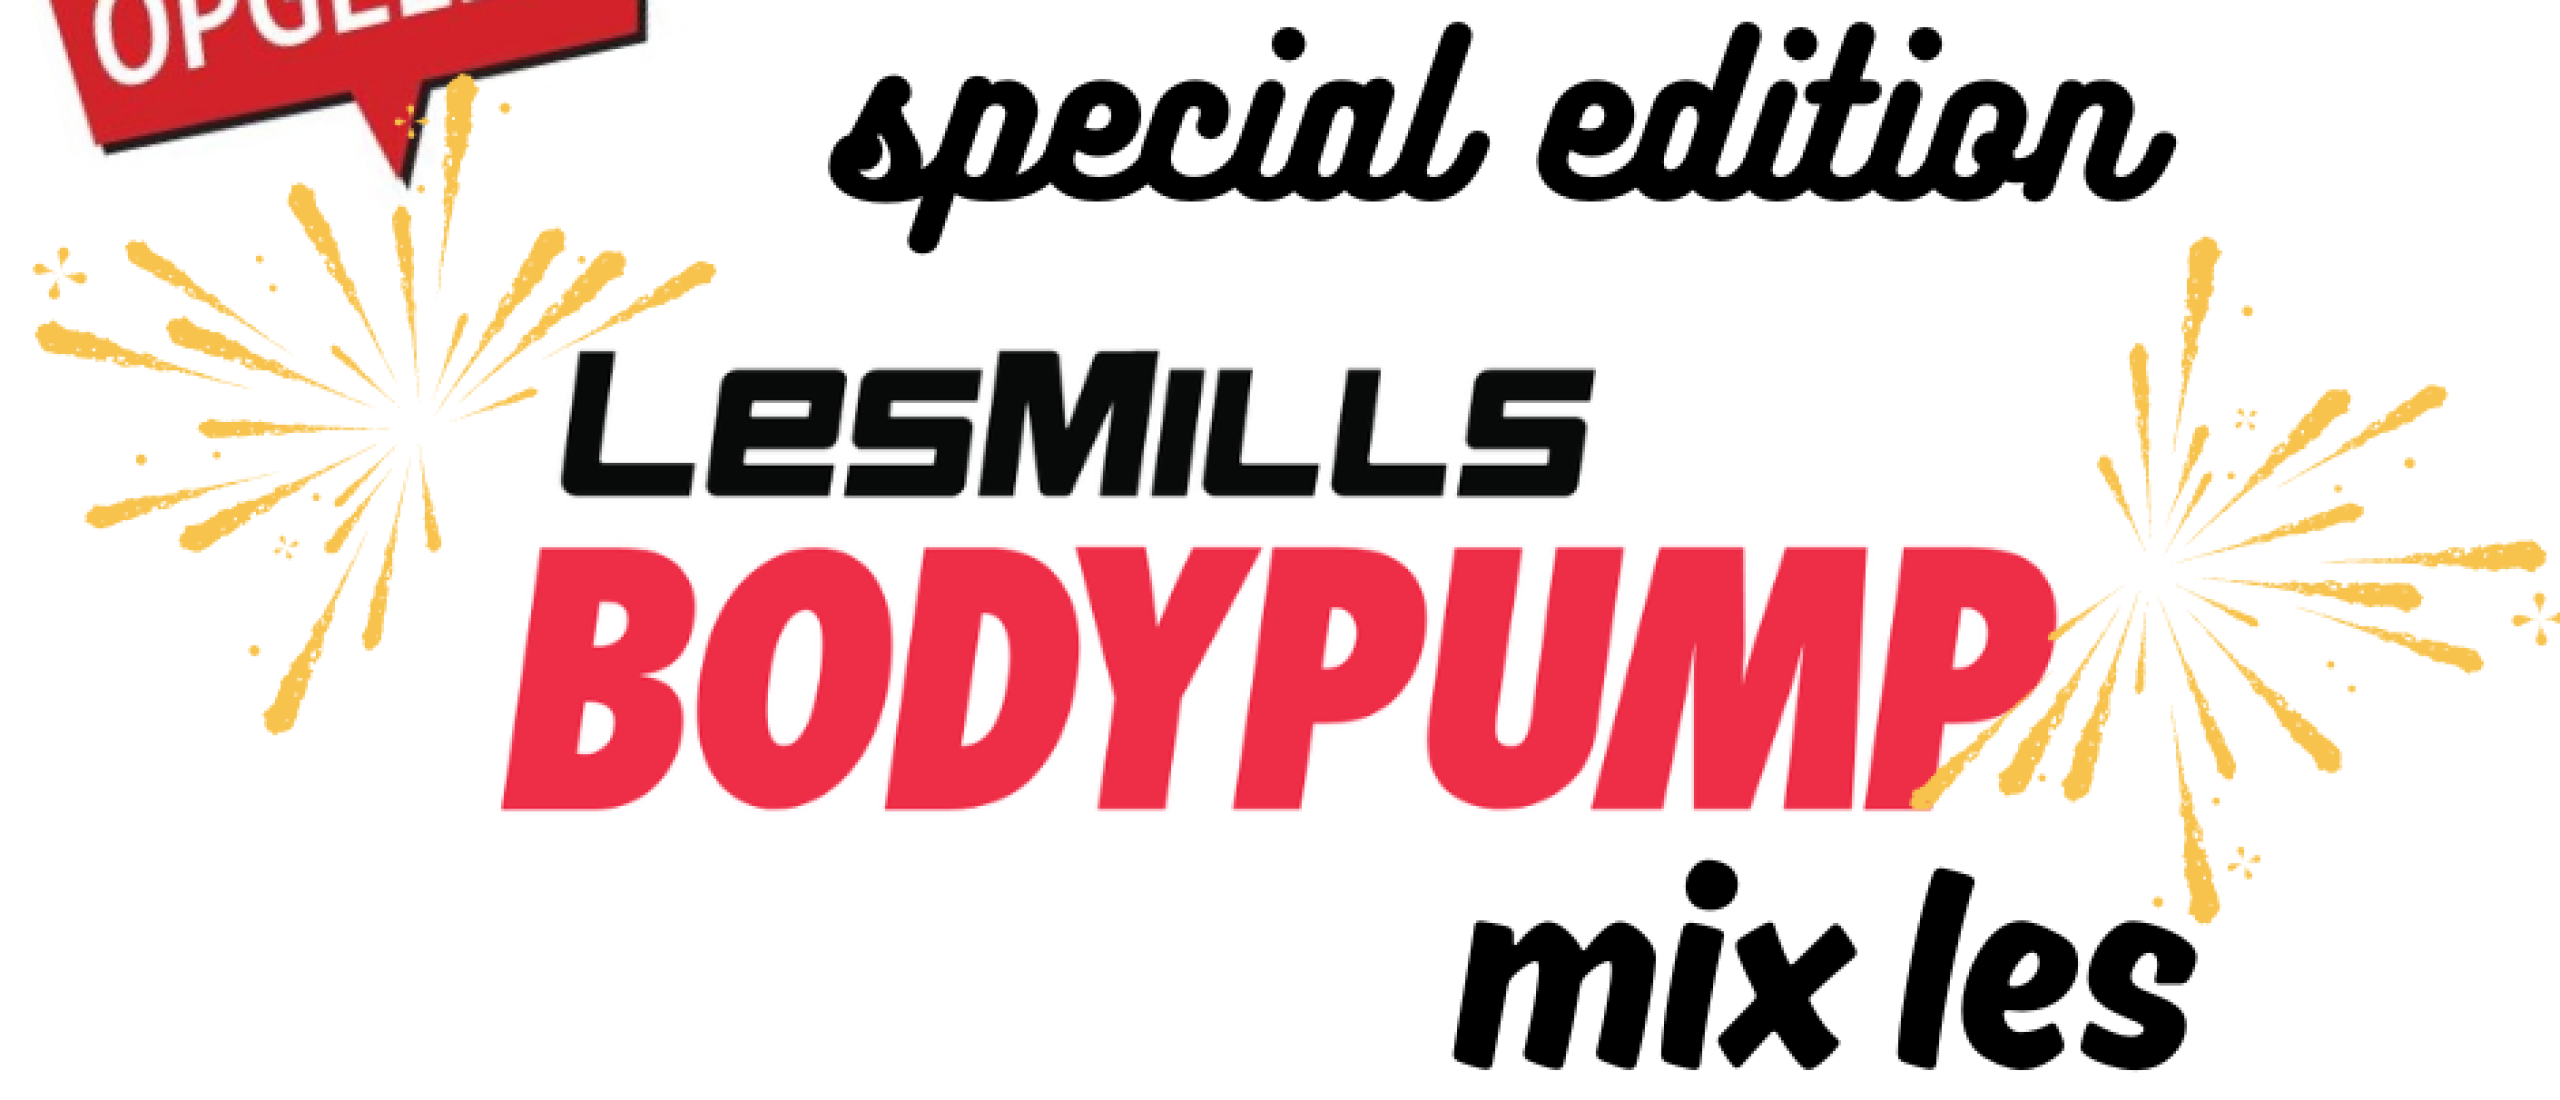 Speciale editie Bodypump les